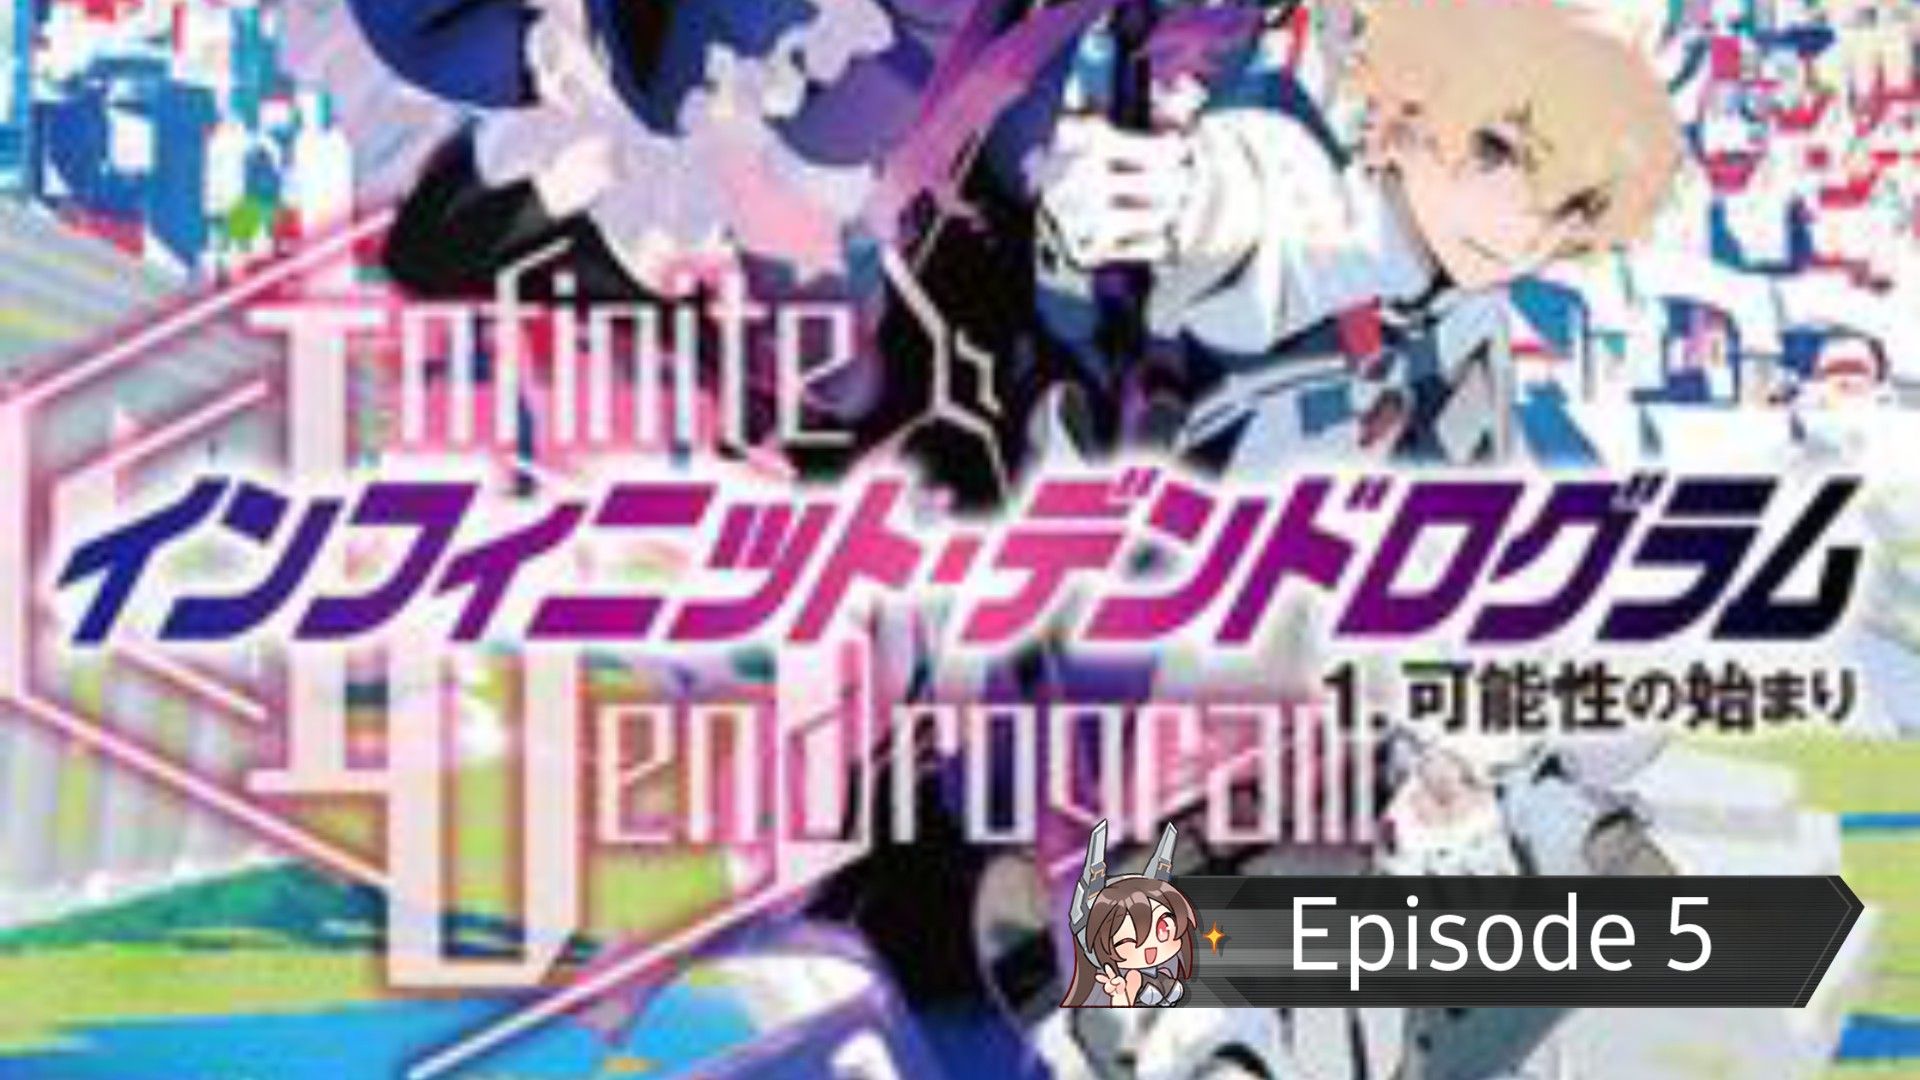 Infinite Dendrogram ‒ Episode 5  Anime episodes, Anime background, Anime